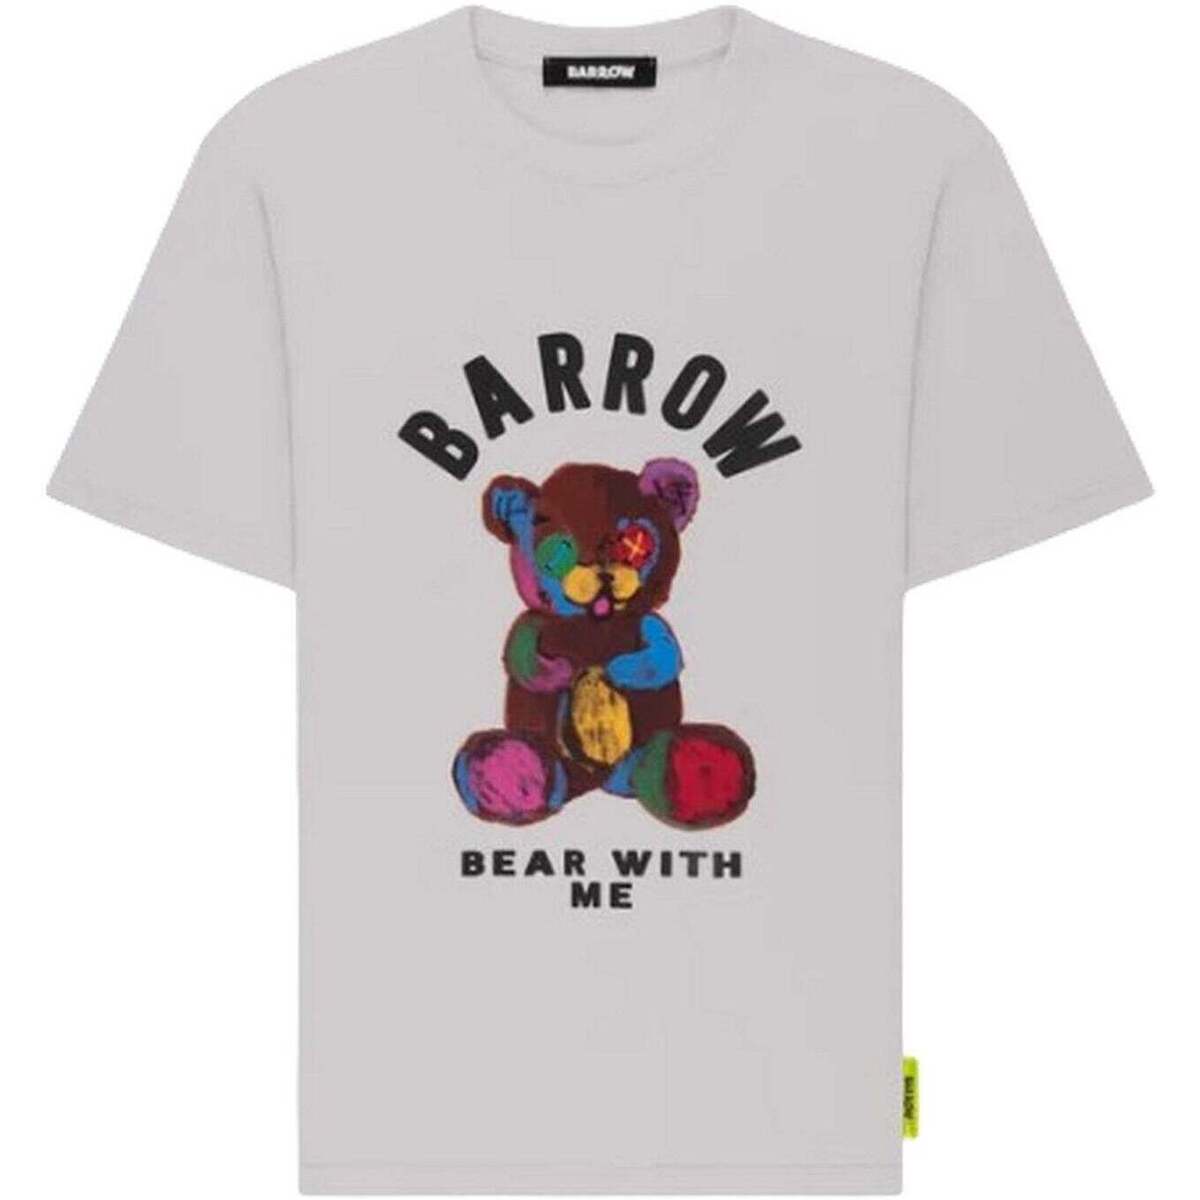 Abbigliamento Uomo T-shirt maniche corte Barrow SKU_273235_1529494 Bianco